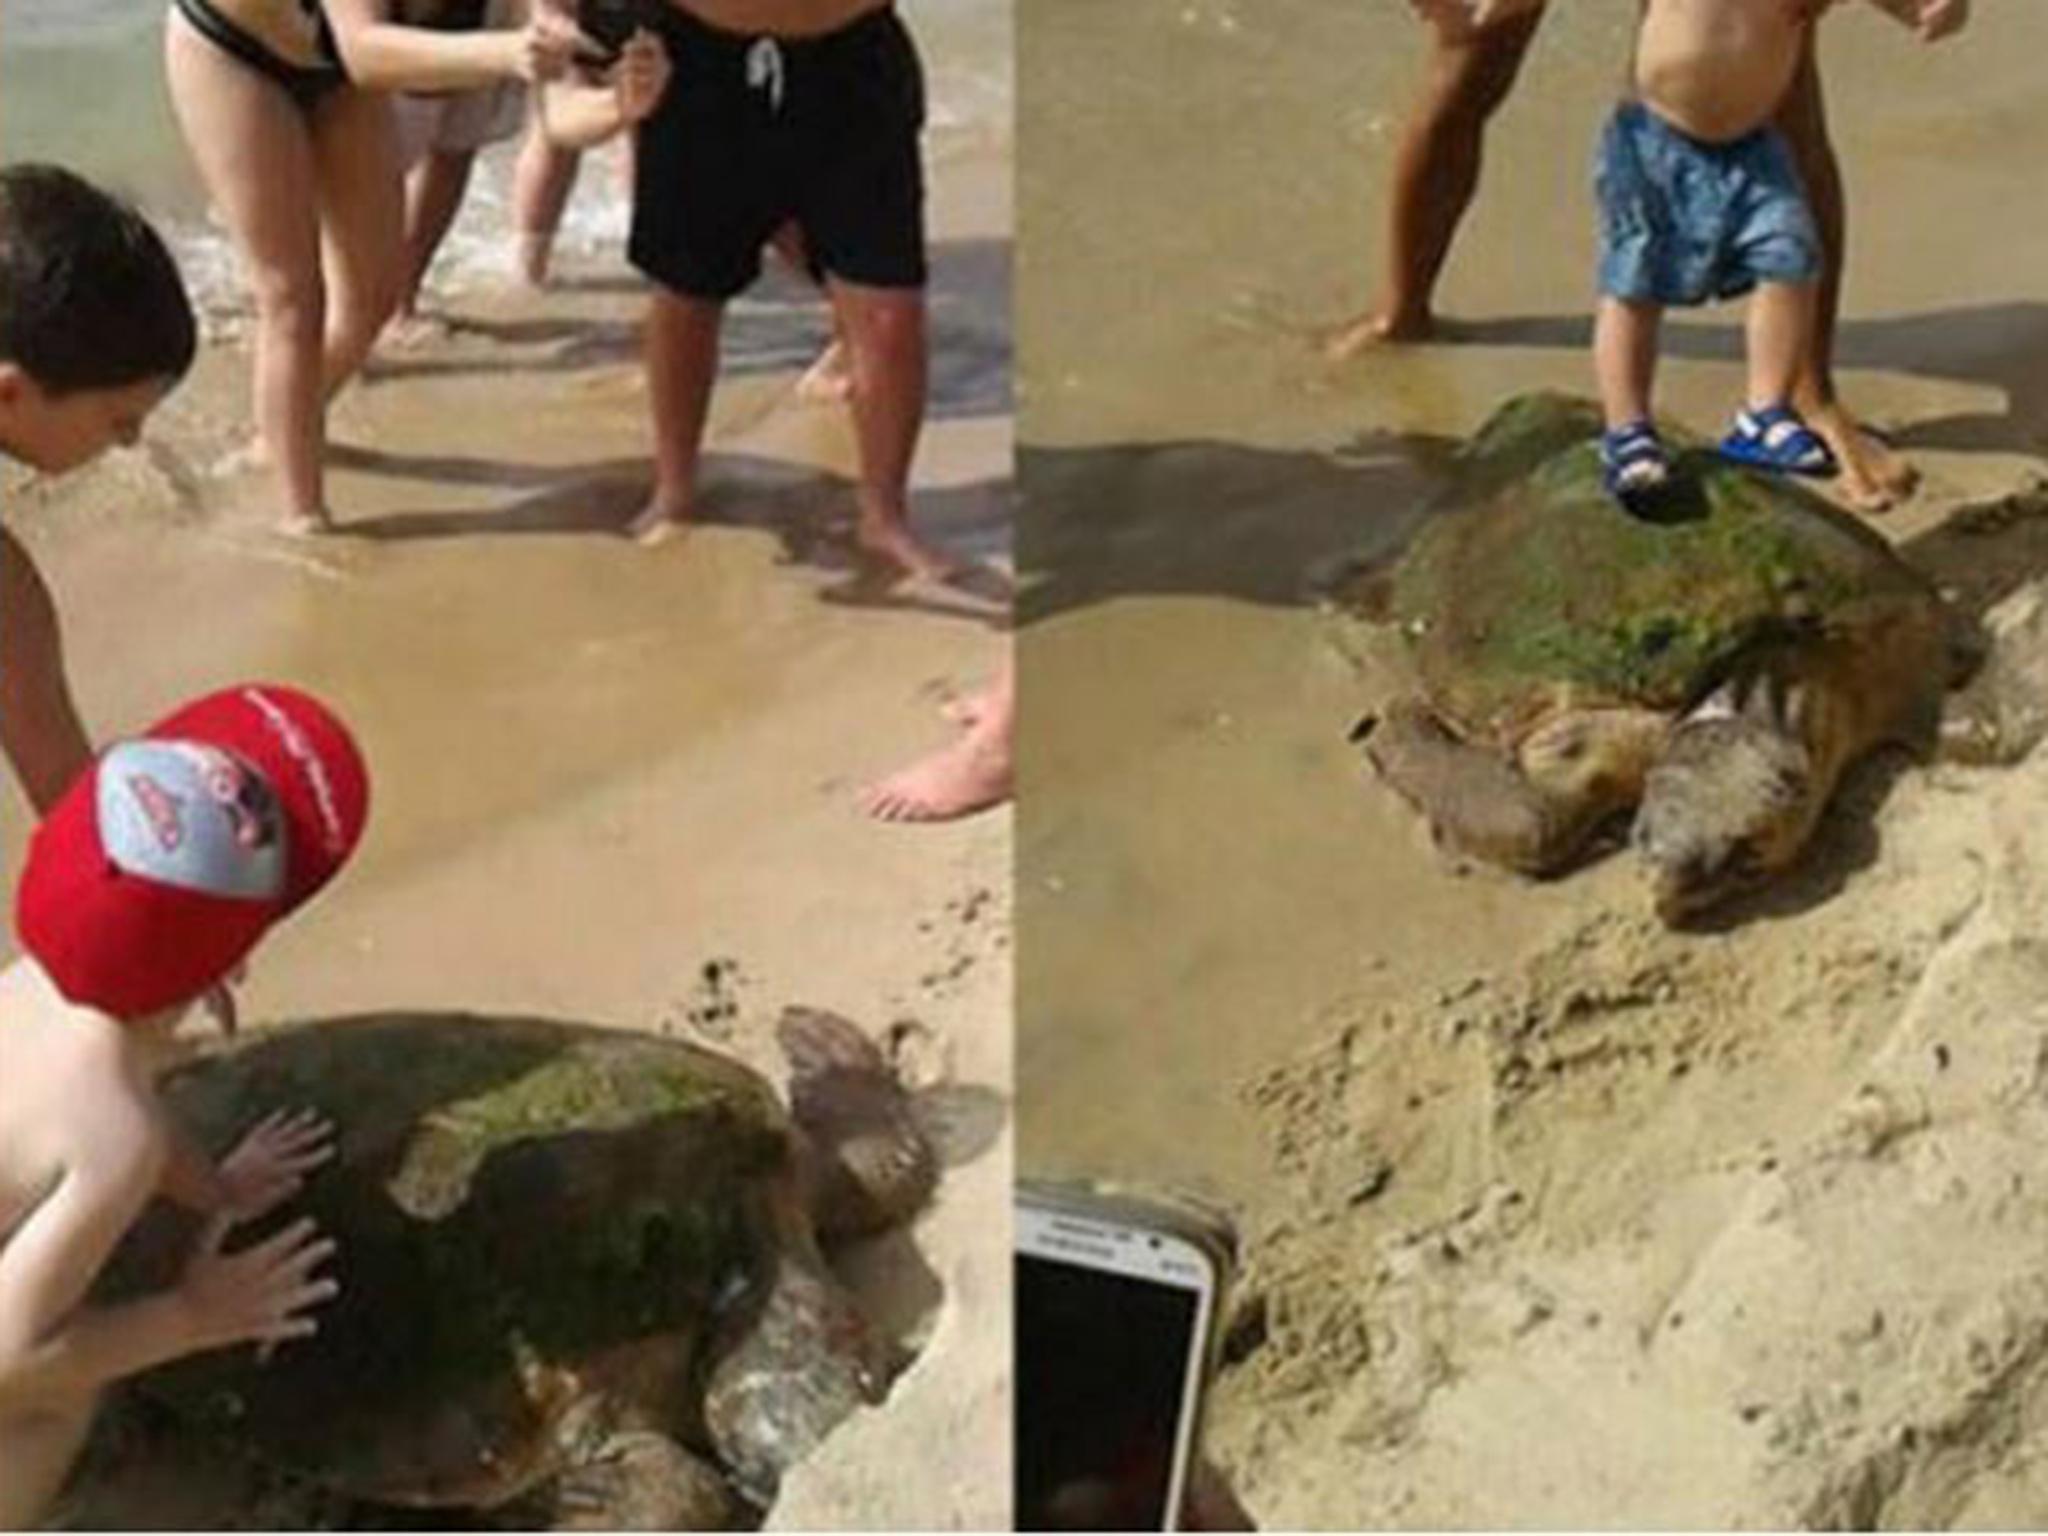 People posed standing on the sea turtle - causing head trauma